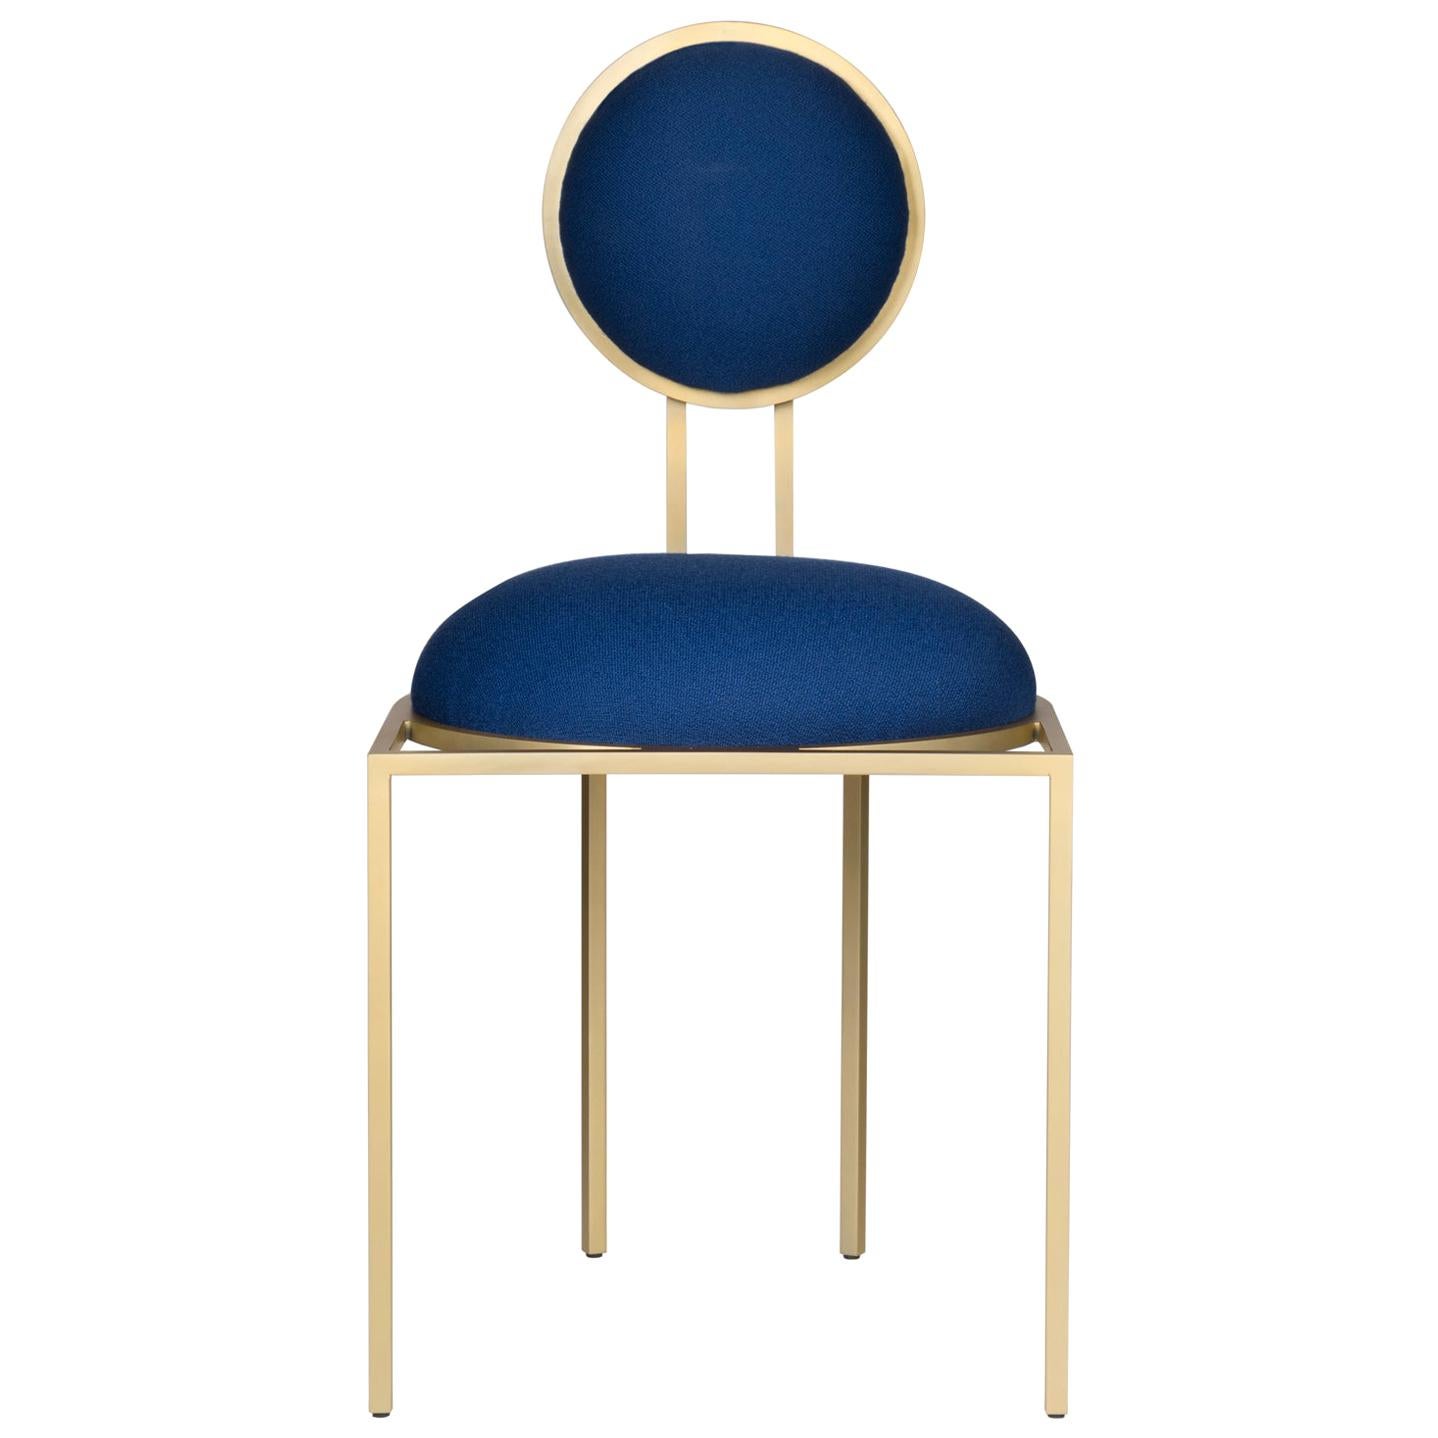 Orbit Dining Chair in Blue Wool Fabric, Brushed Brass, by Lara Bohinc